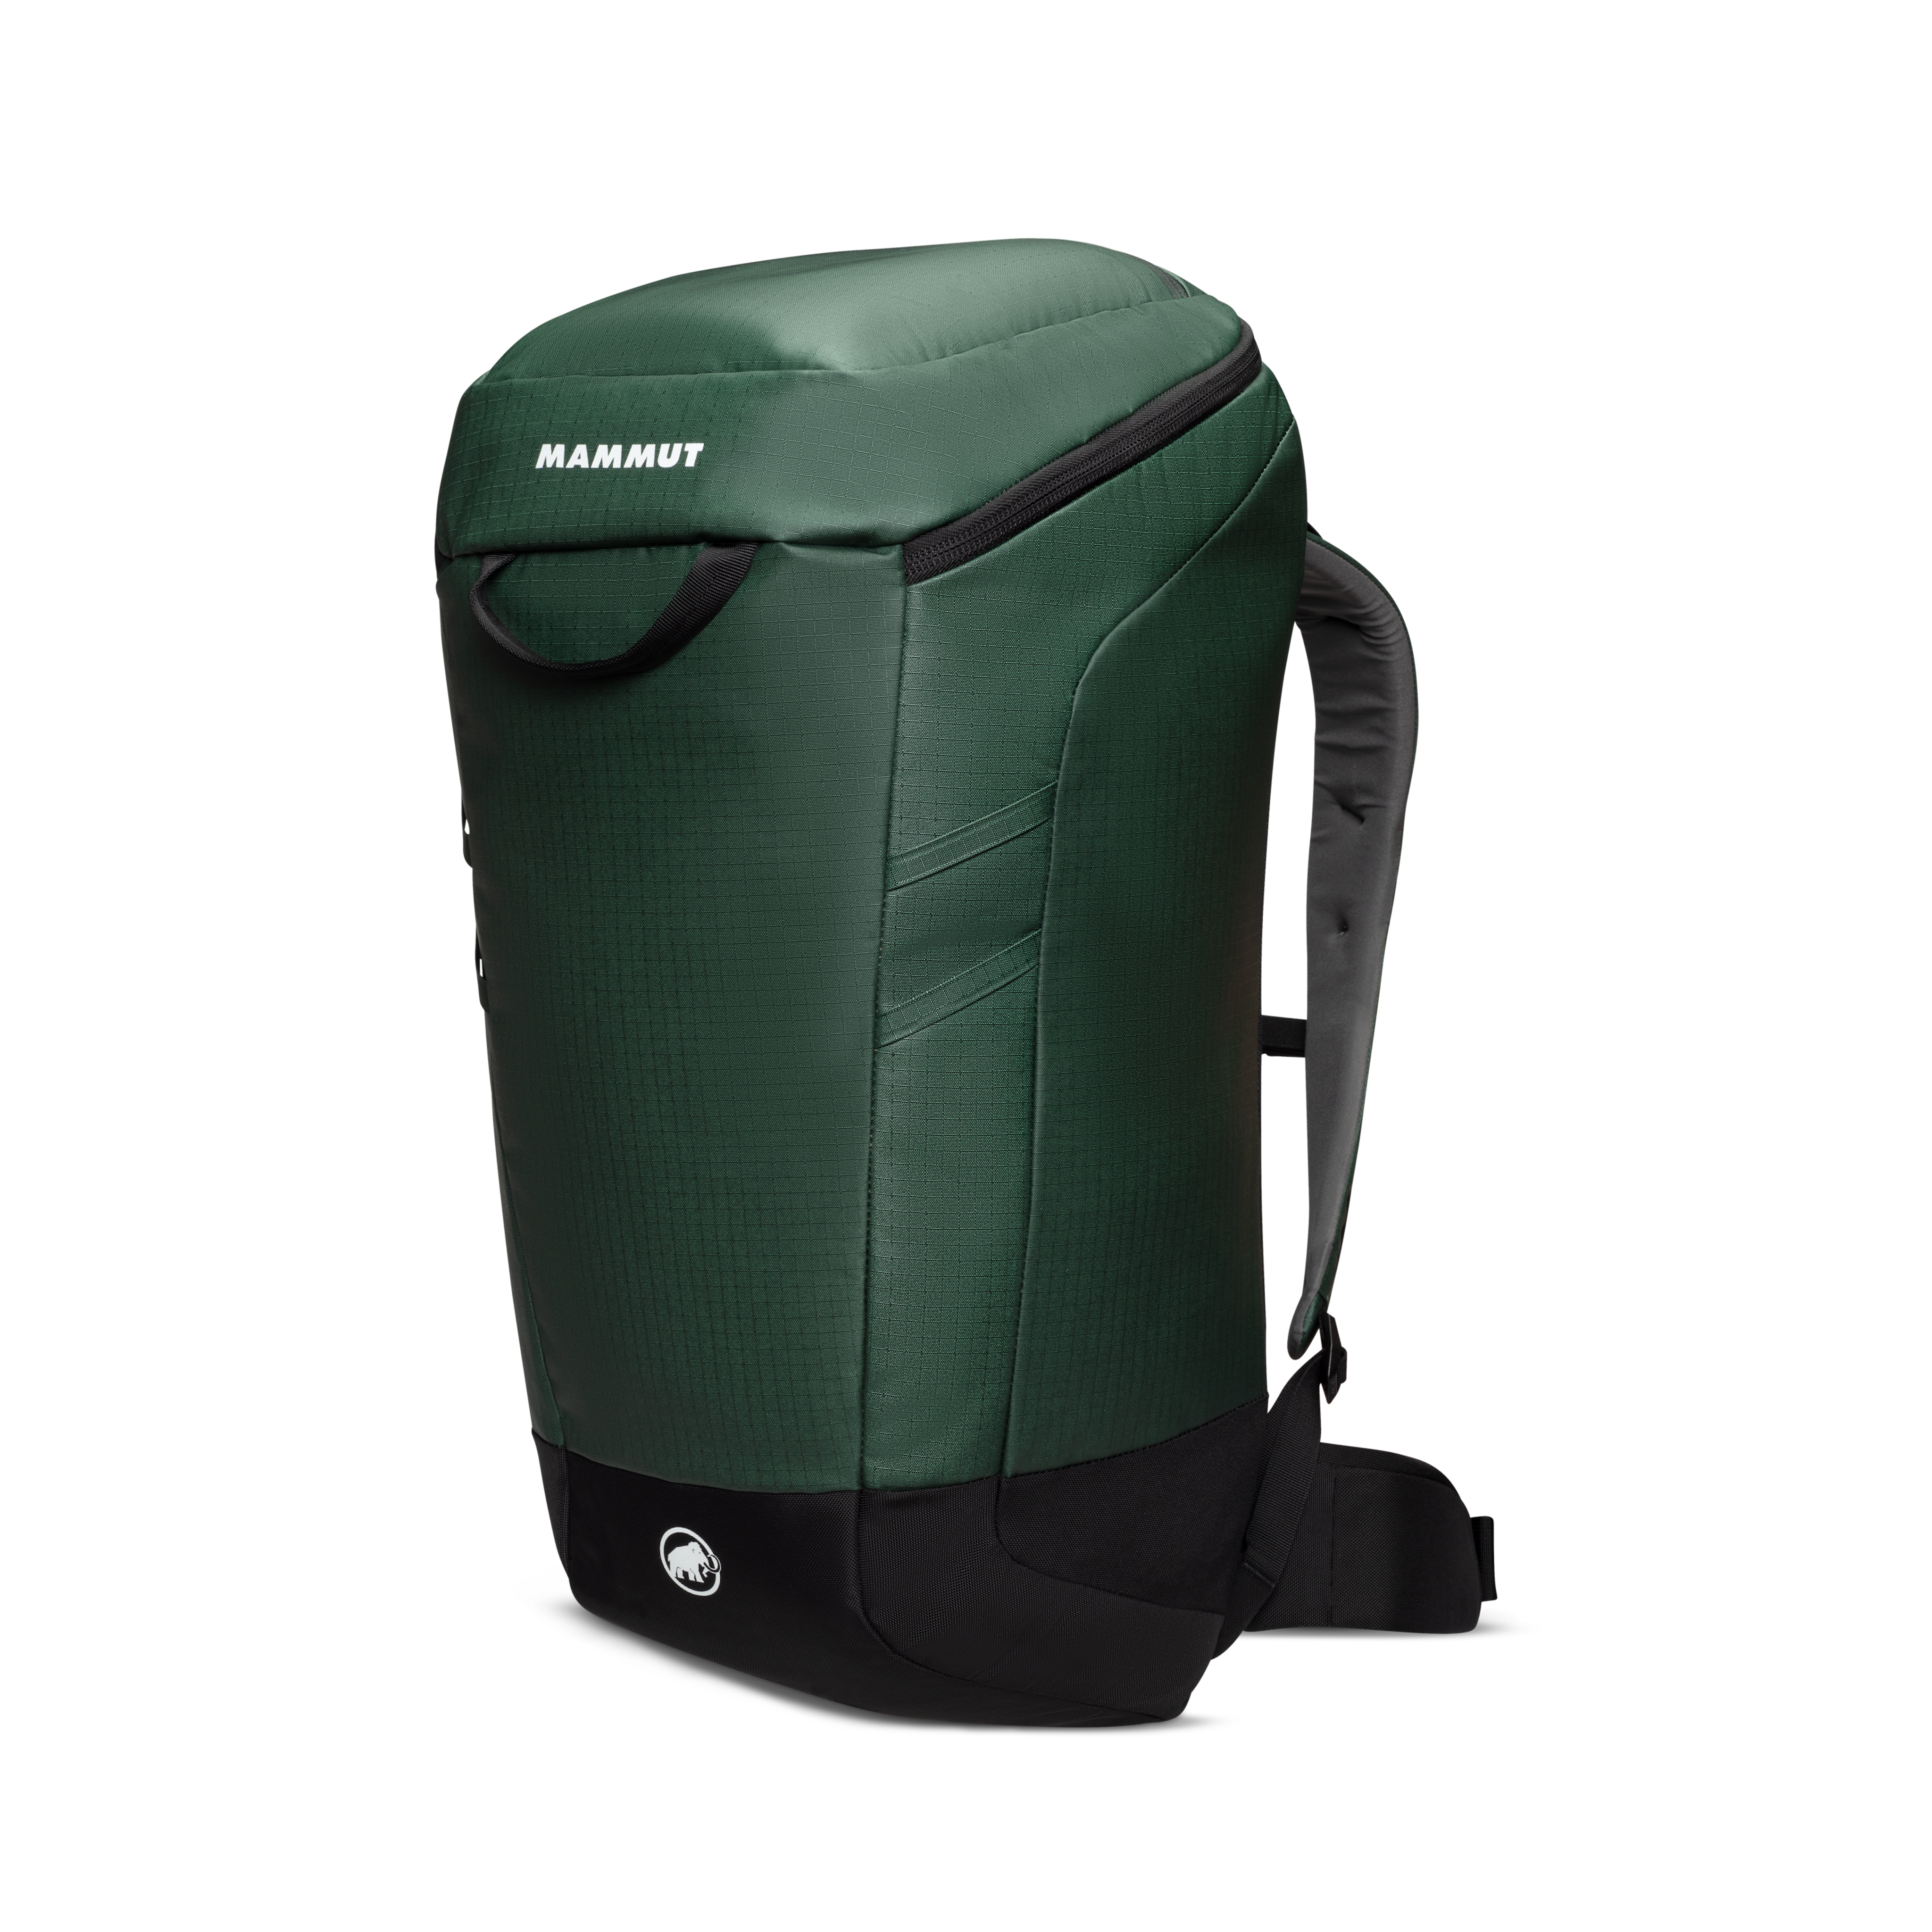 Mammut backpack in green